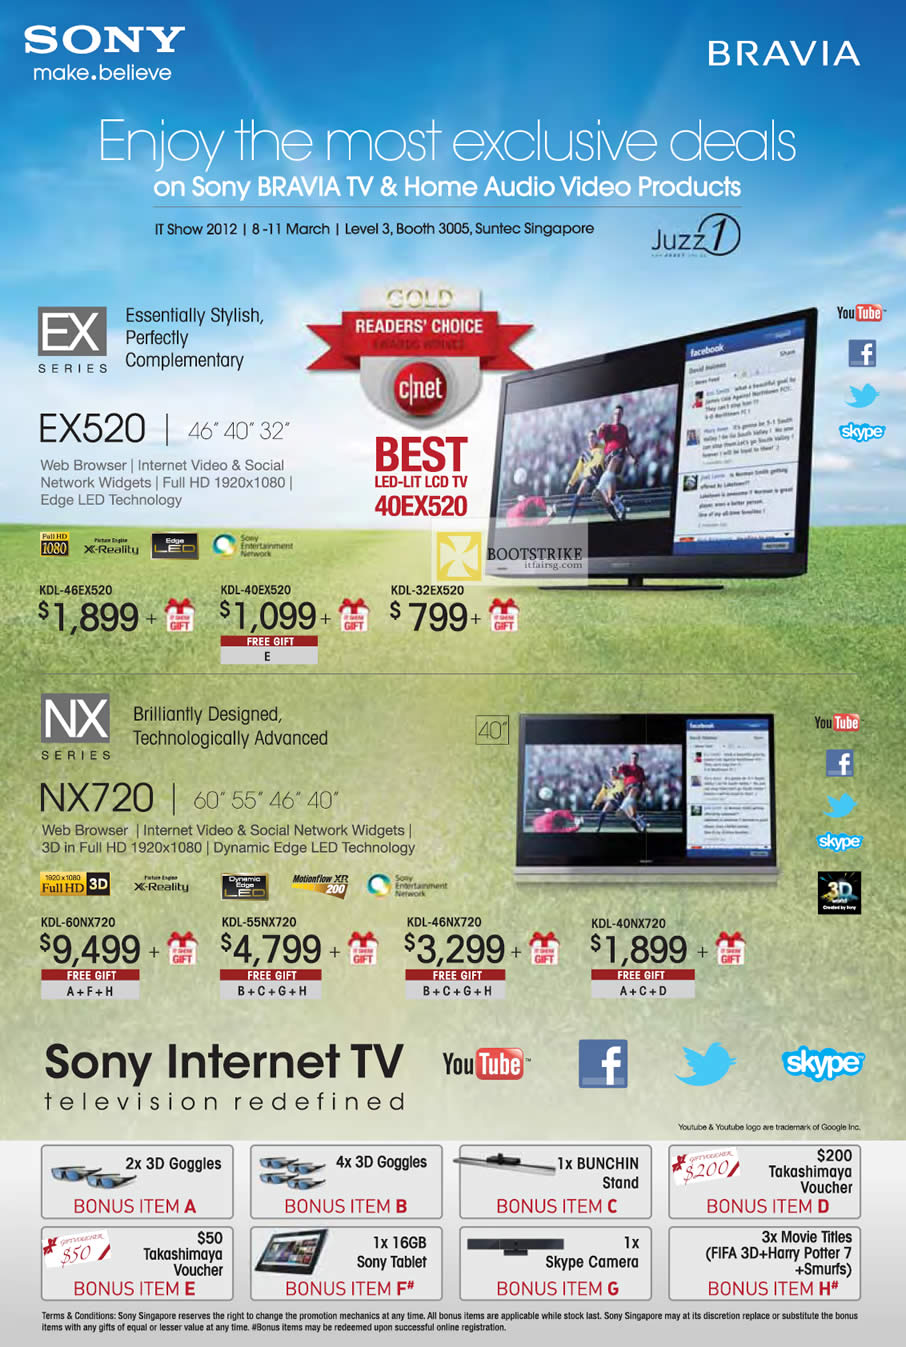 IT SHOW 2012 price list image brochure of Sony Juzz1 Bravia LED LCD TV KDL-46EX520, KDL-40EX520, KDL-32EX520, KDL-60NX720, KDL-55NX720, KDL-46NX720, KDL-40NX720